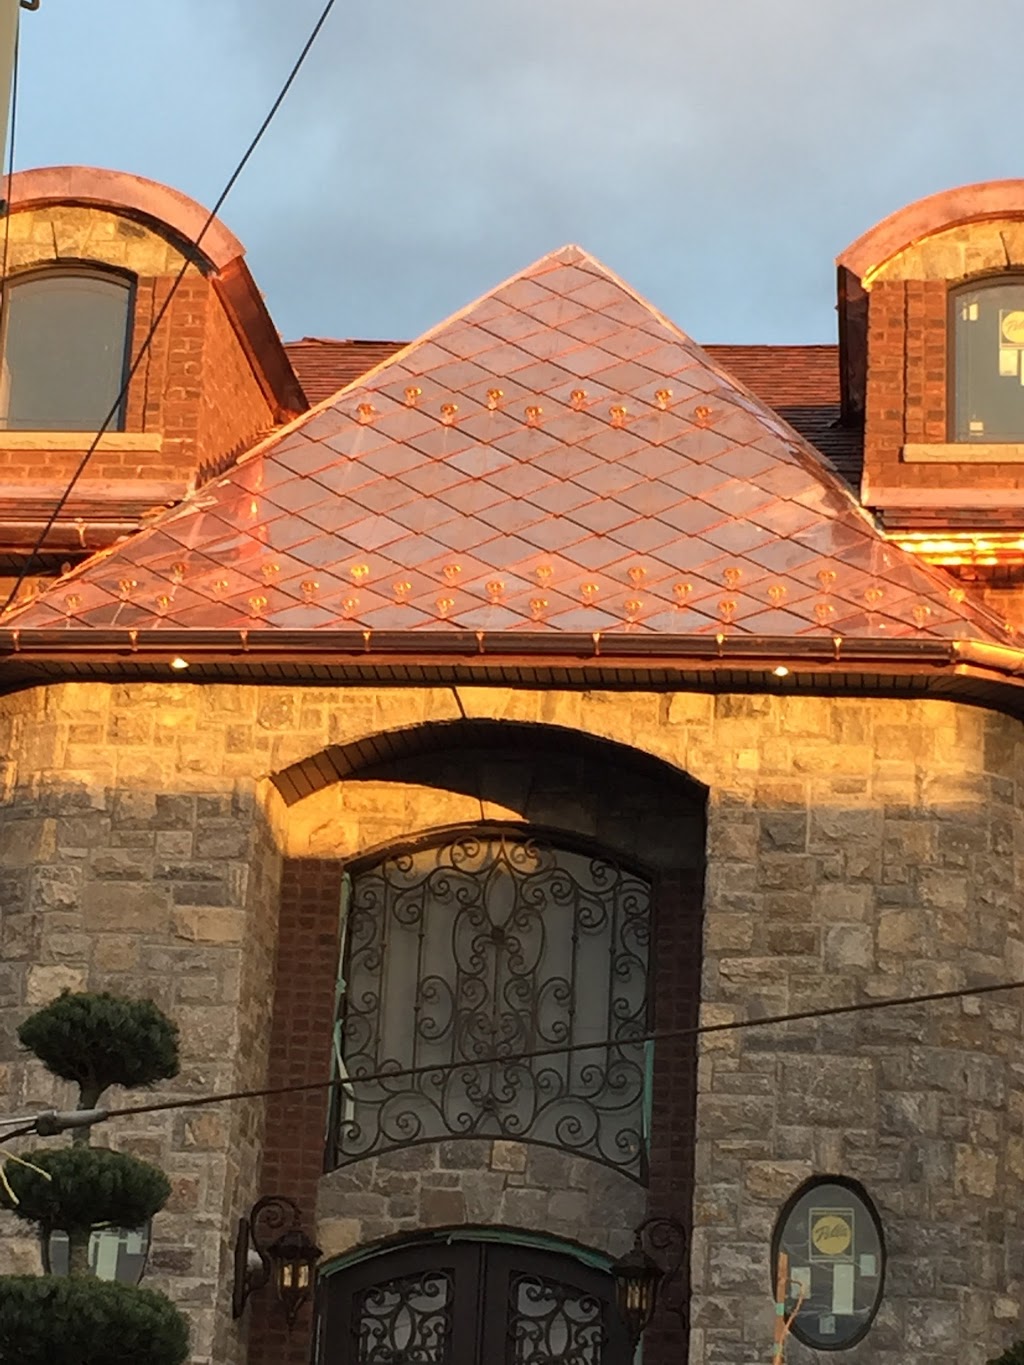 Roman Roofing Inc | 65 Dean St, Hicksville, NY 11801 | Phone: (917) 418-4766